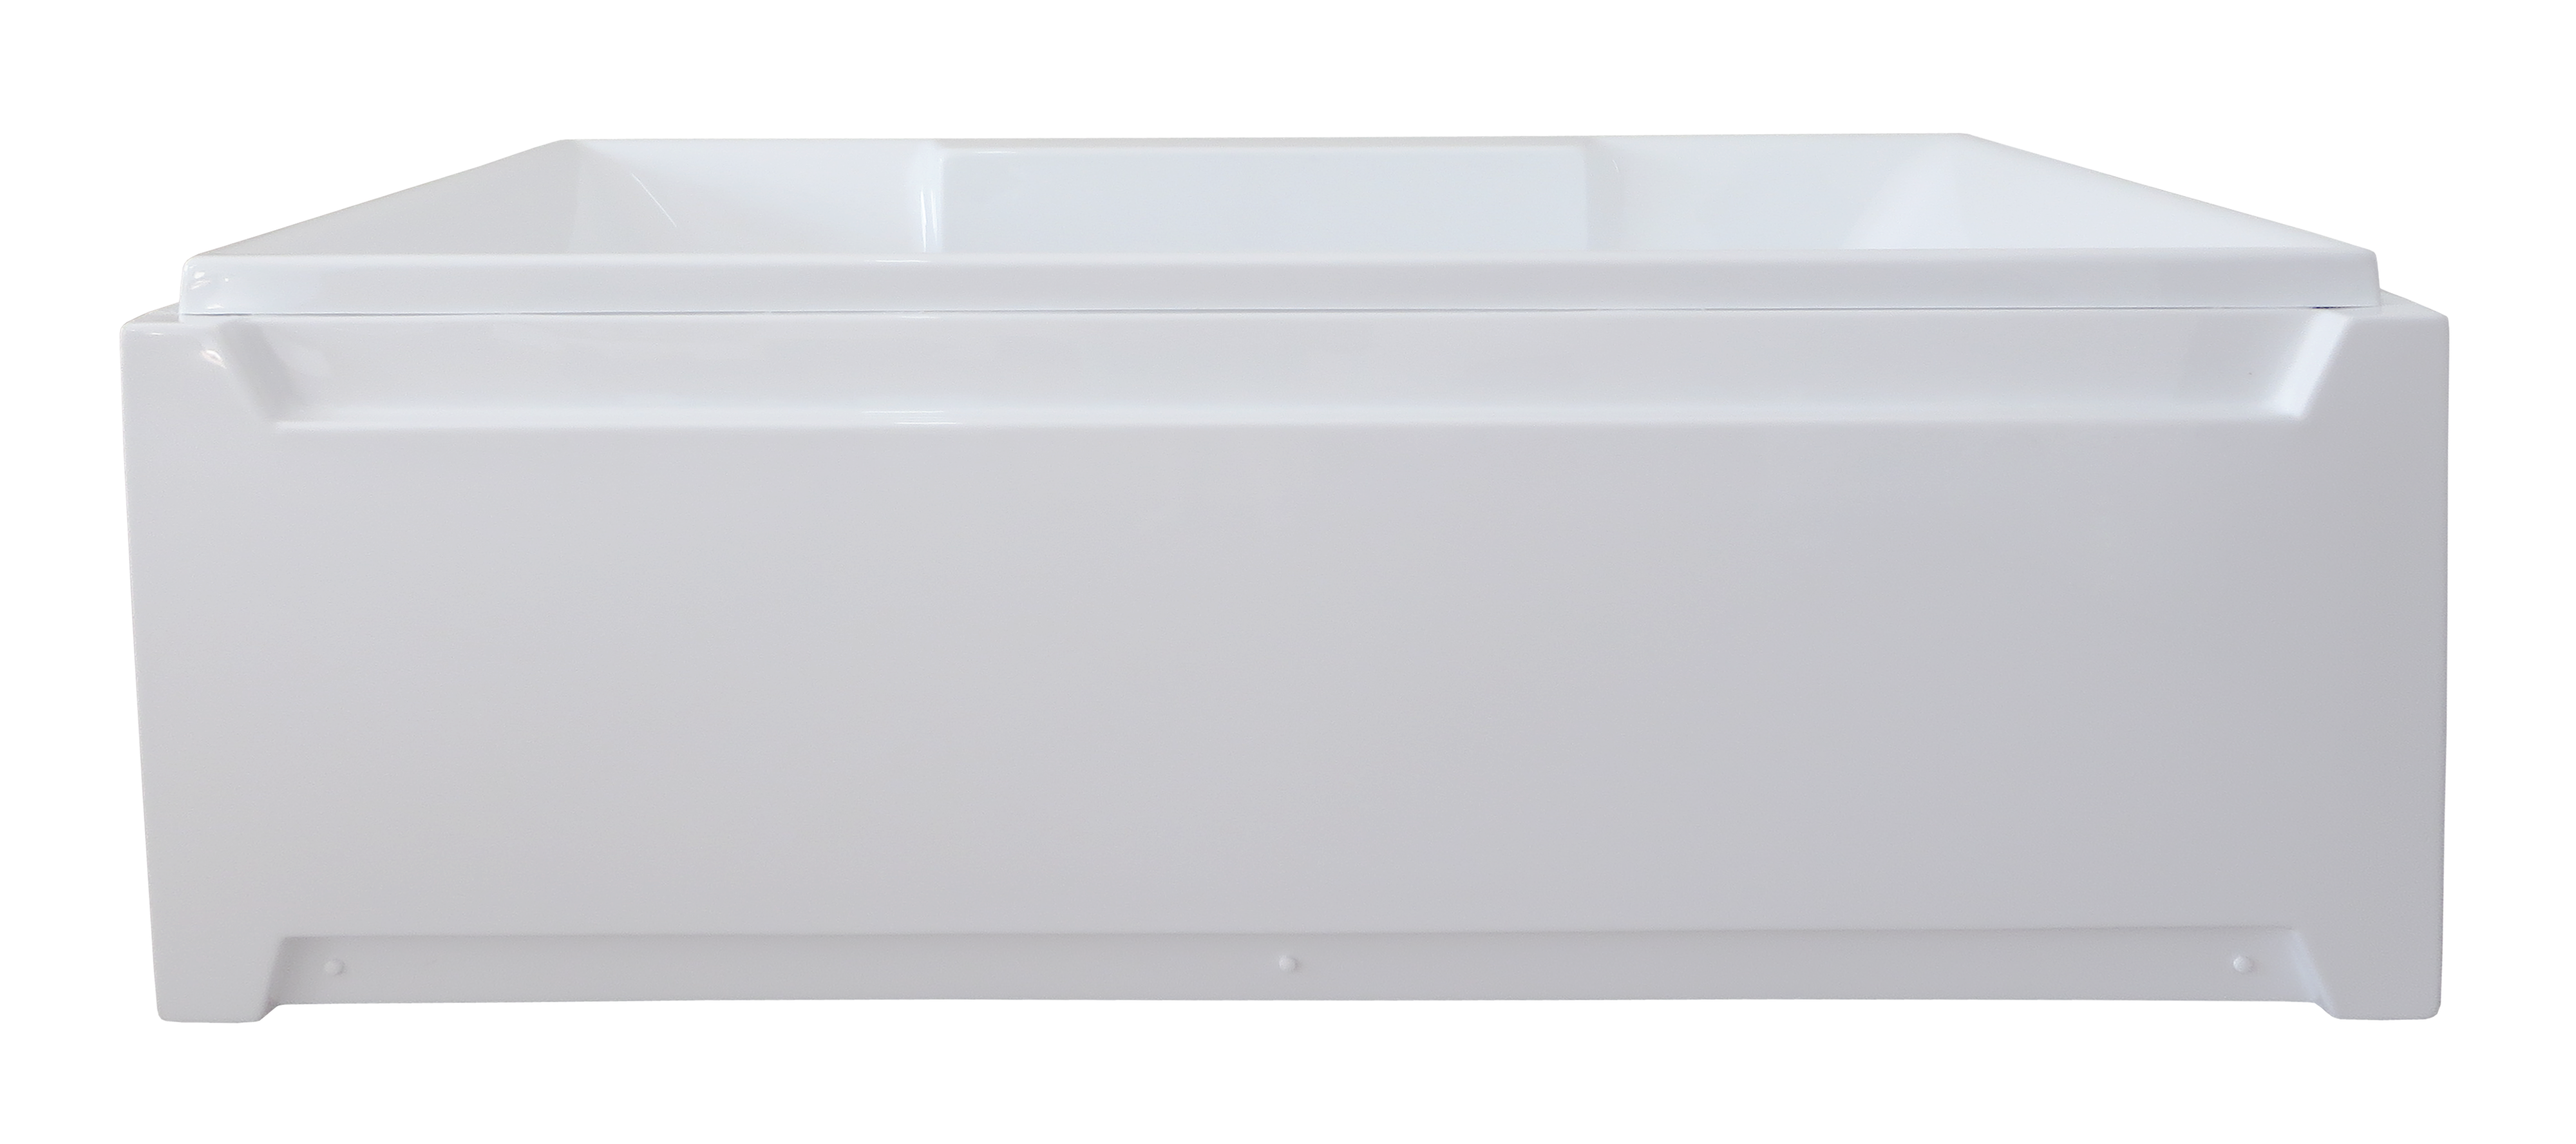 Акриловая ванна Royal Bath Triumph 185x90 на каркасе, размер 185x90, цвет белый RB665102K - фото 3